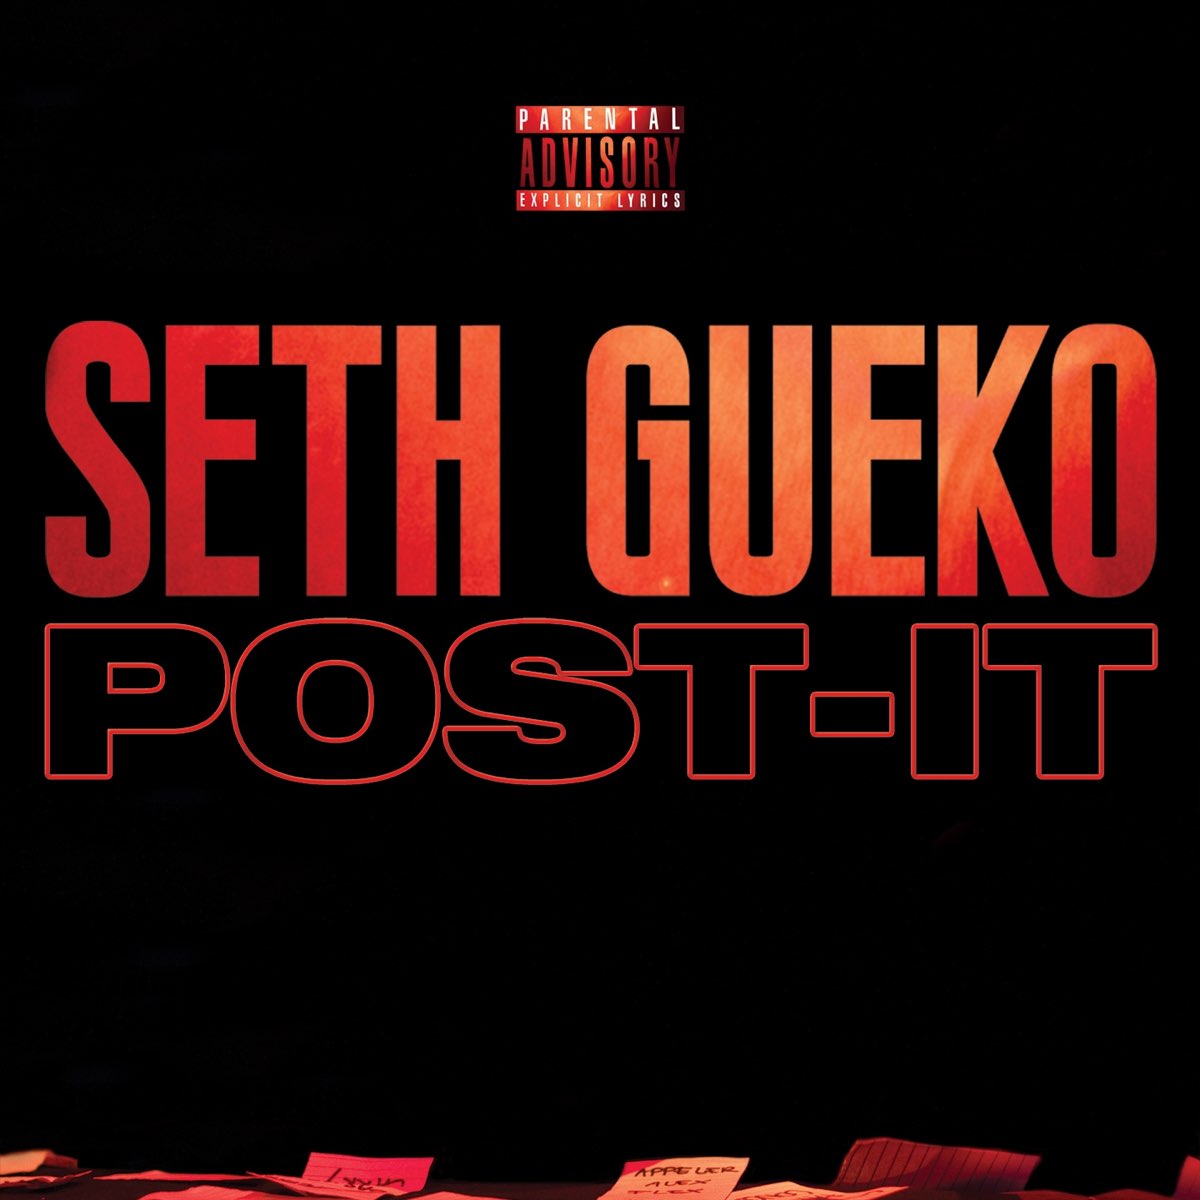 Post-it - Single – Album par Seth Gueko – Apple Music